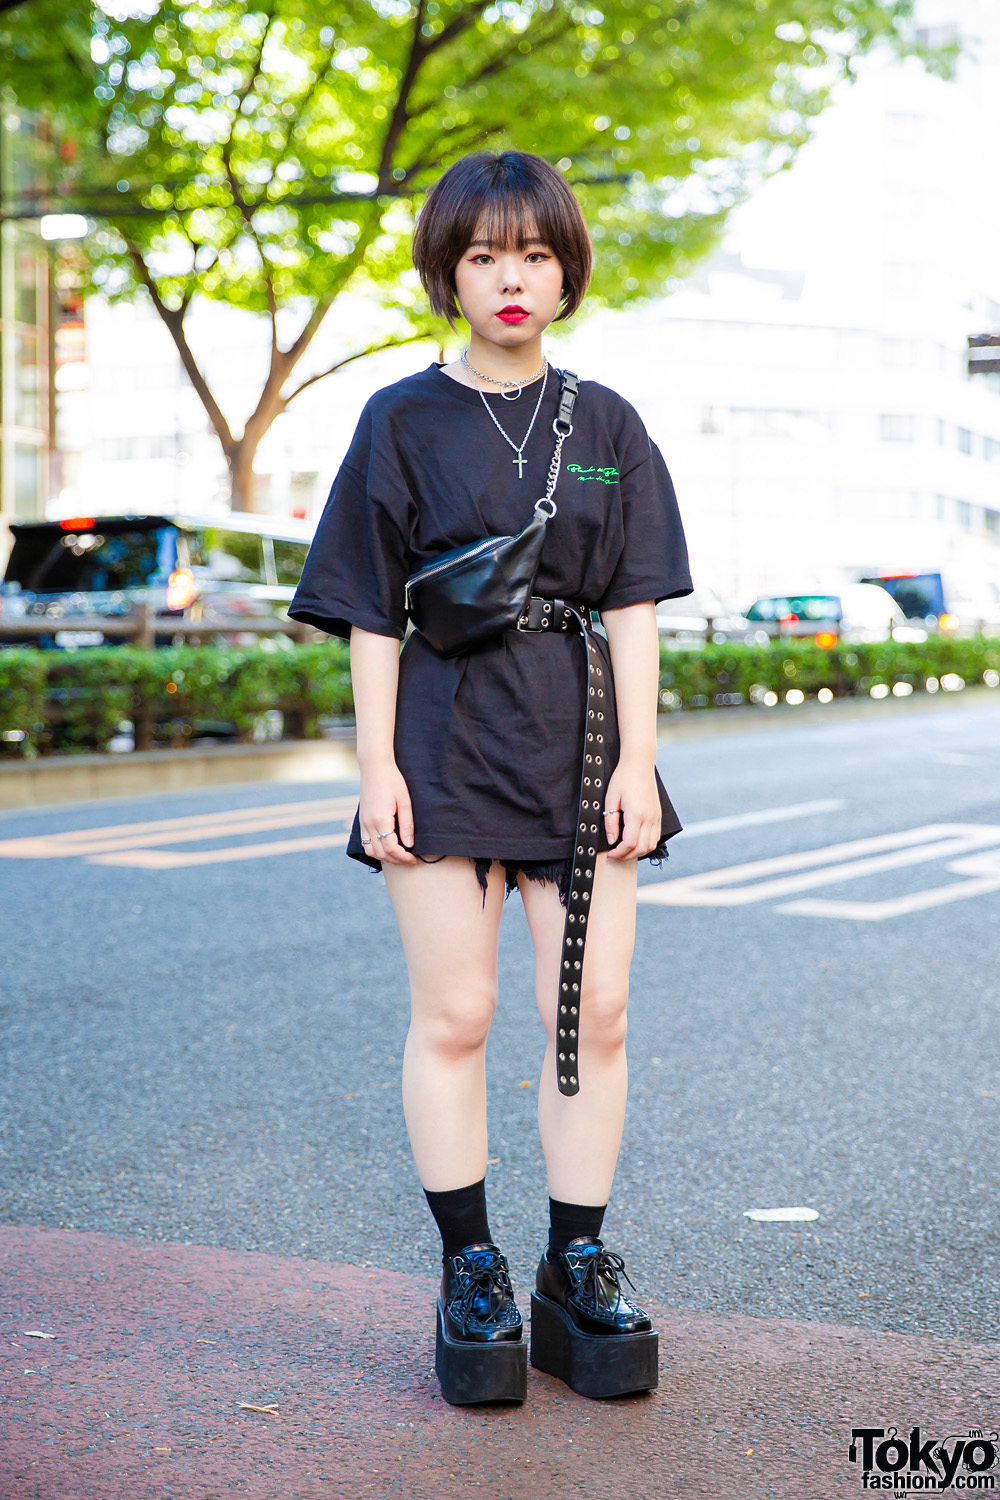 Harajuku Girl's Street Style w/ BLACKxBLACK T-Shirt, Denim Frayed Shorts, Yosuke Platform Creepers, Waist Bag & Accessories